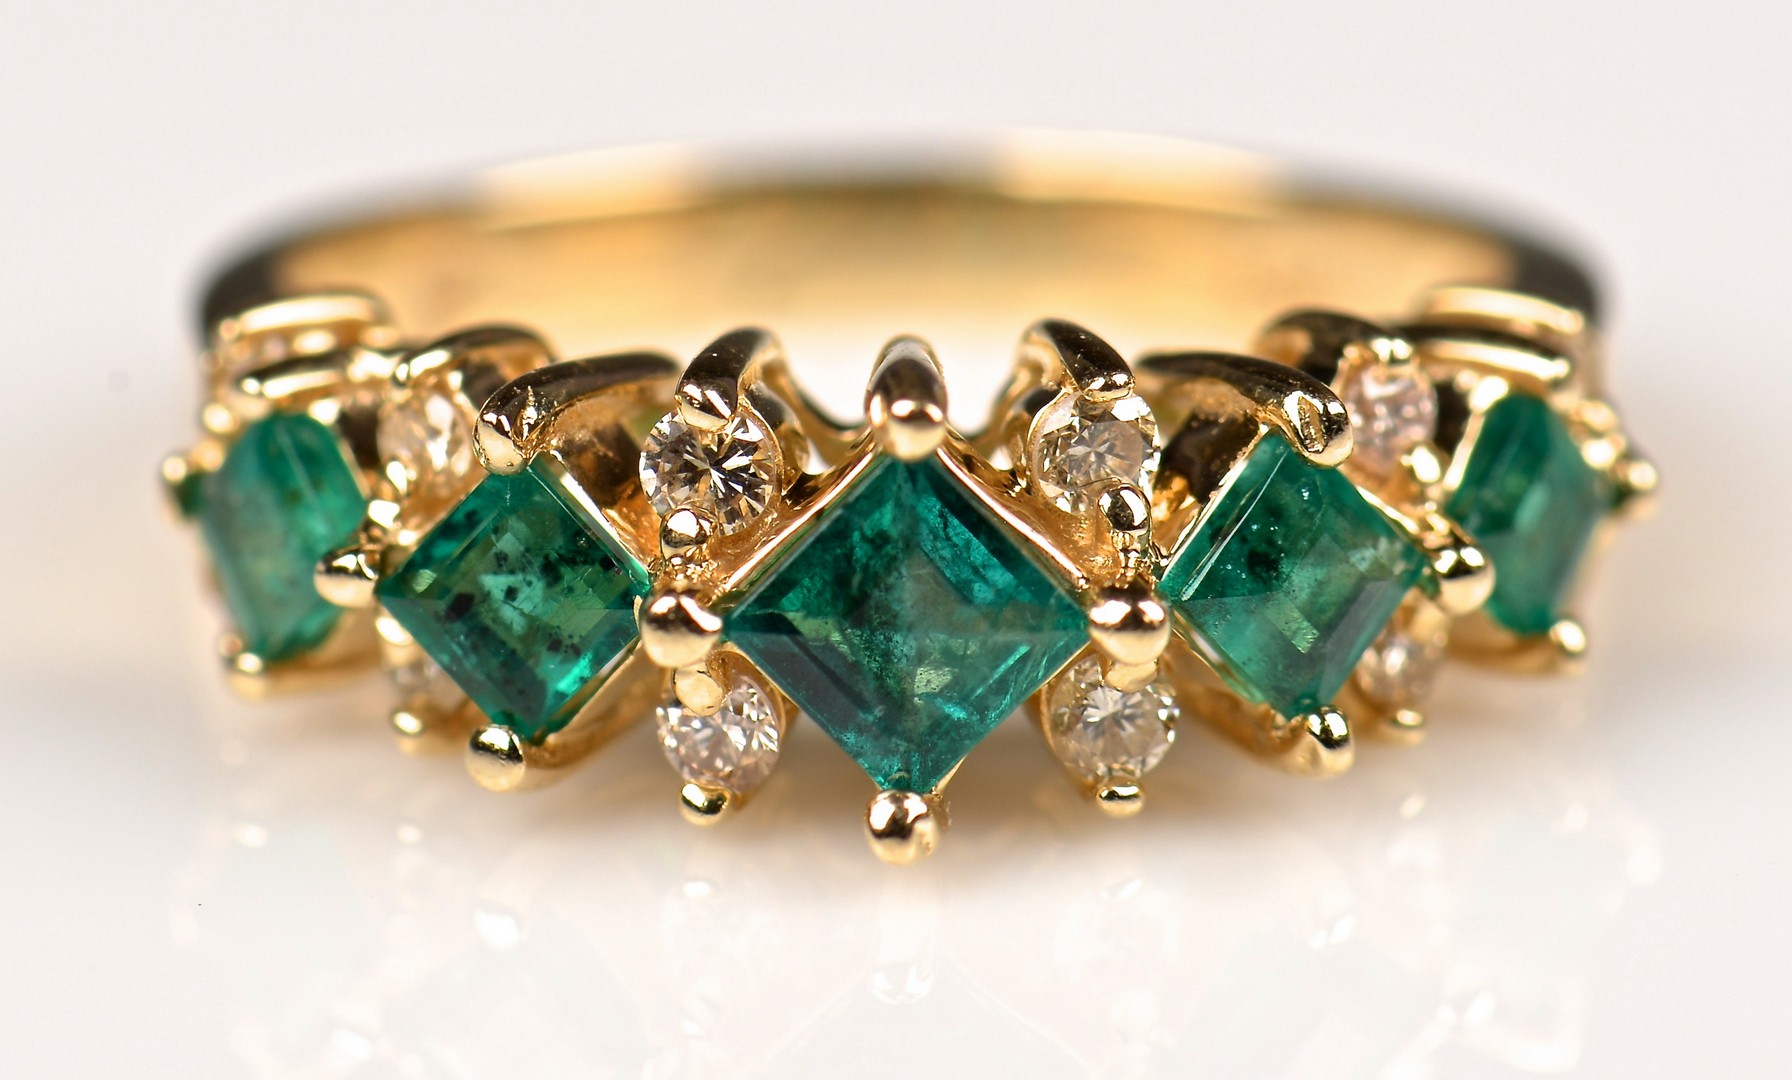 Lot 950: Emerald, Amethyst, Topaz Jewelry